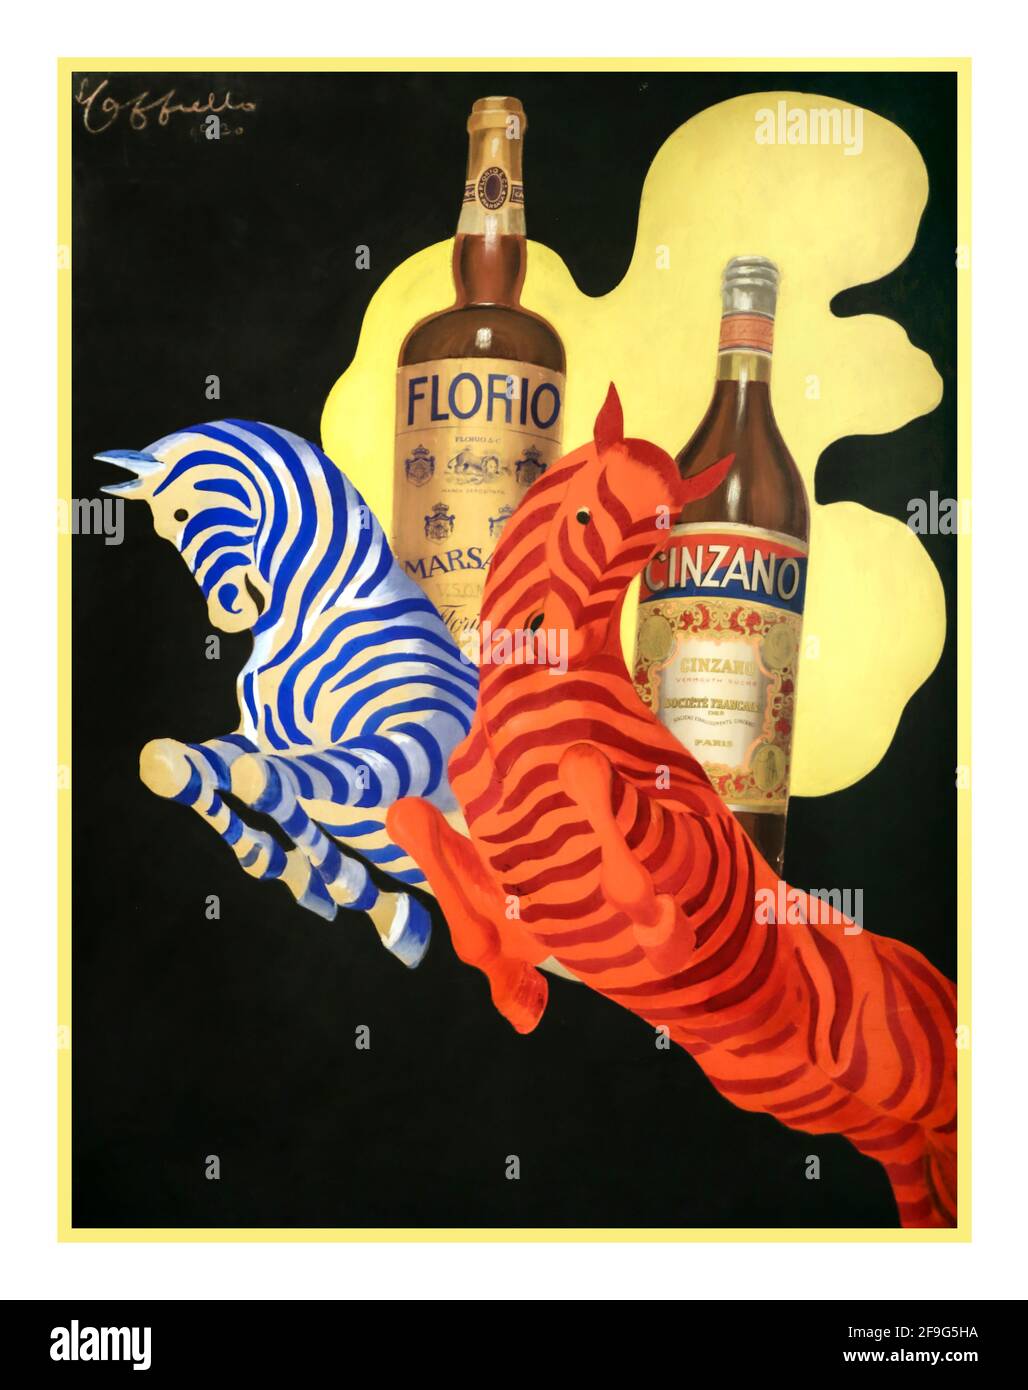 CINZANO FLORIO Vintage 1930's Italian aperitif drinks poster By Leonetto Cappiello of bottle  Florio and bottle Cinzano 1930 Italy Stock Photo